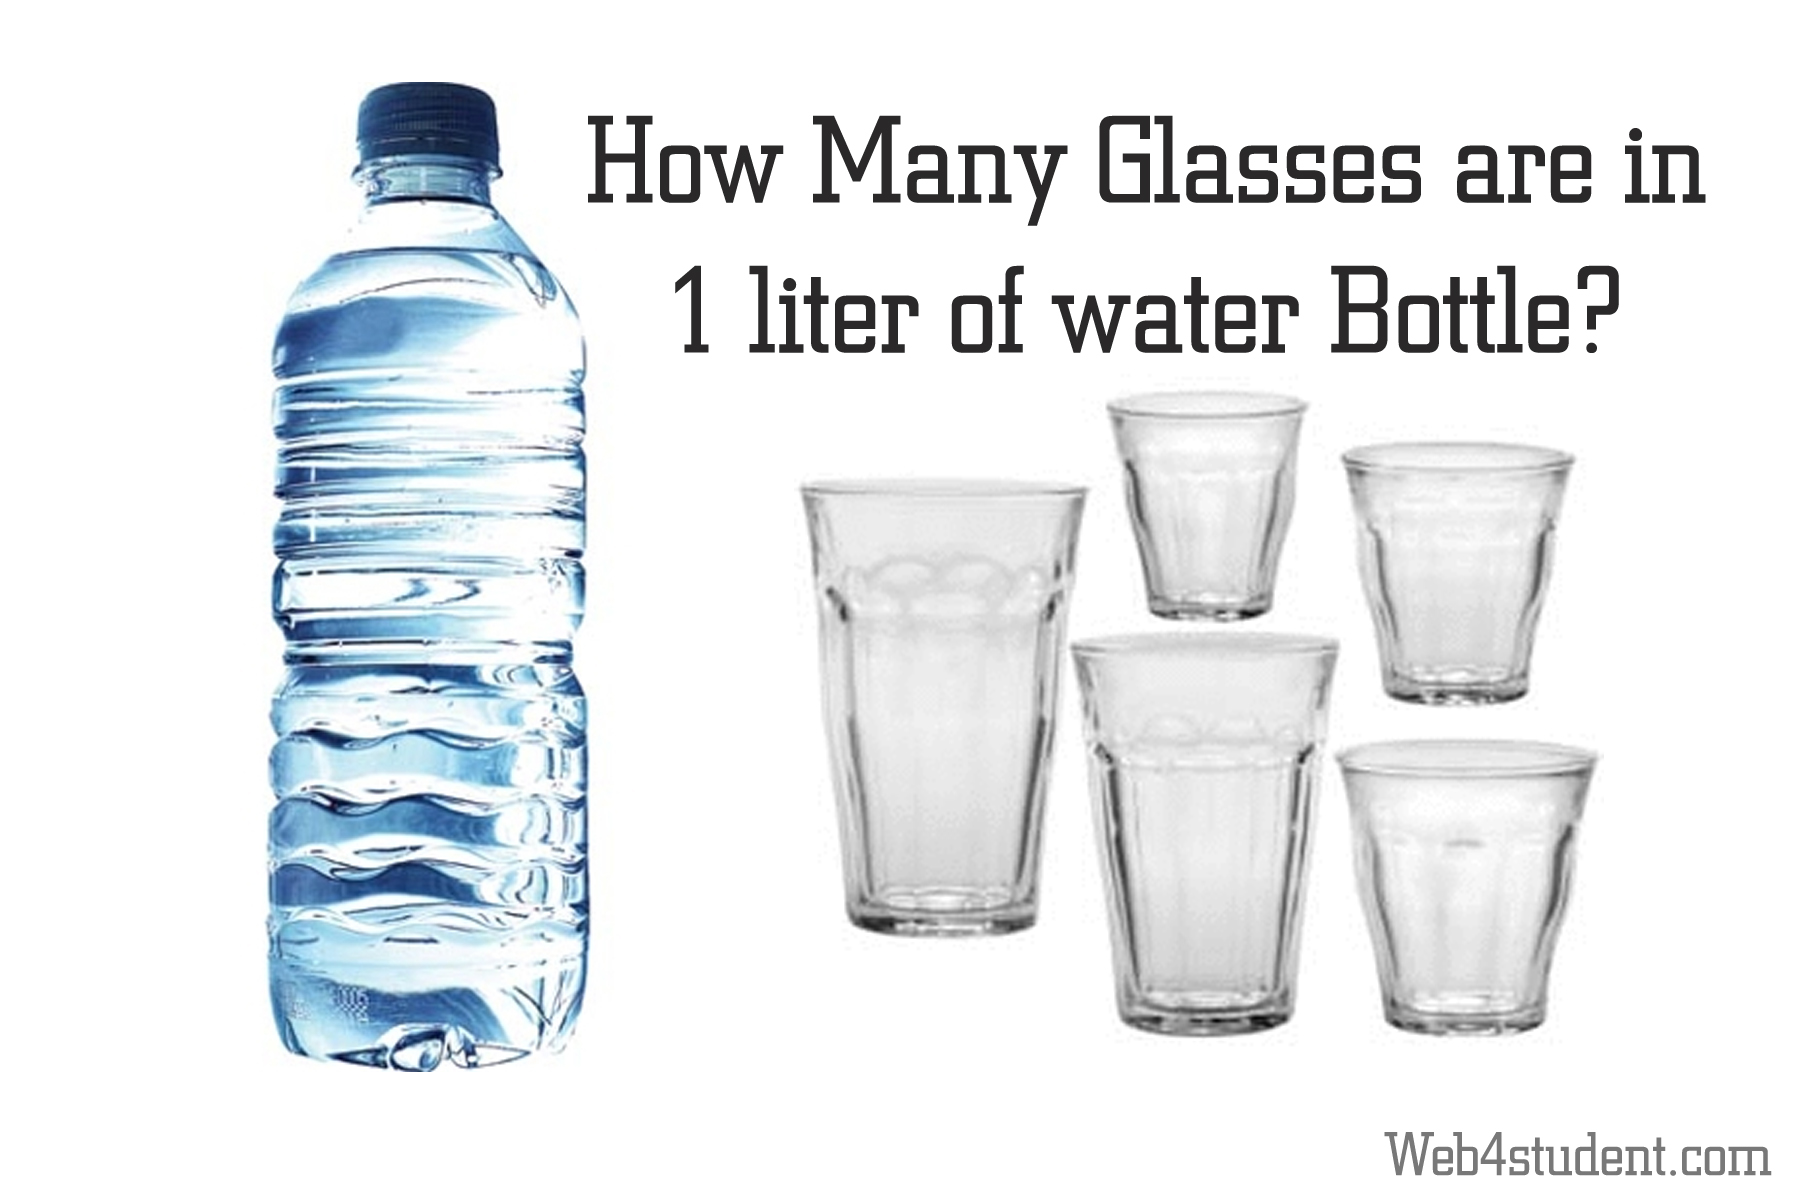 1 liter of water